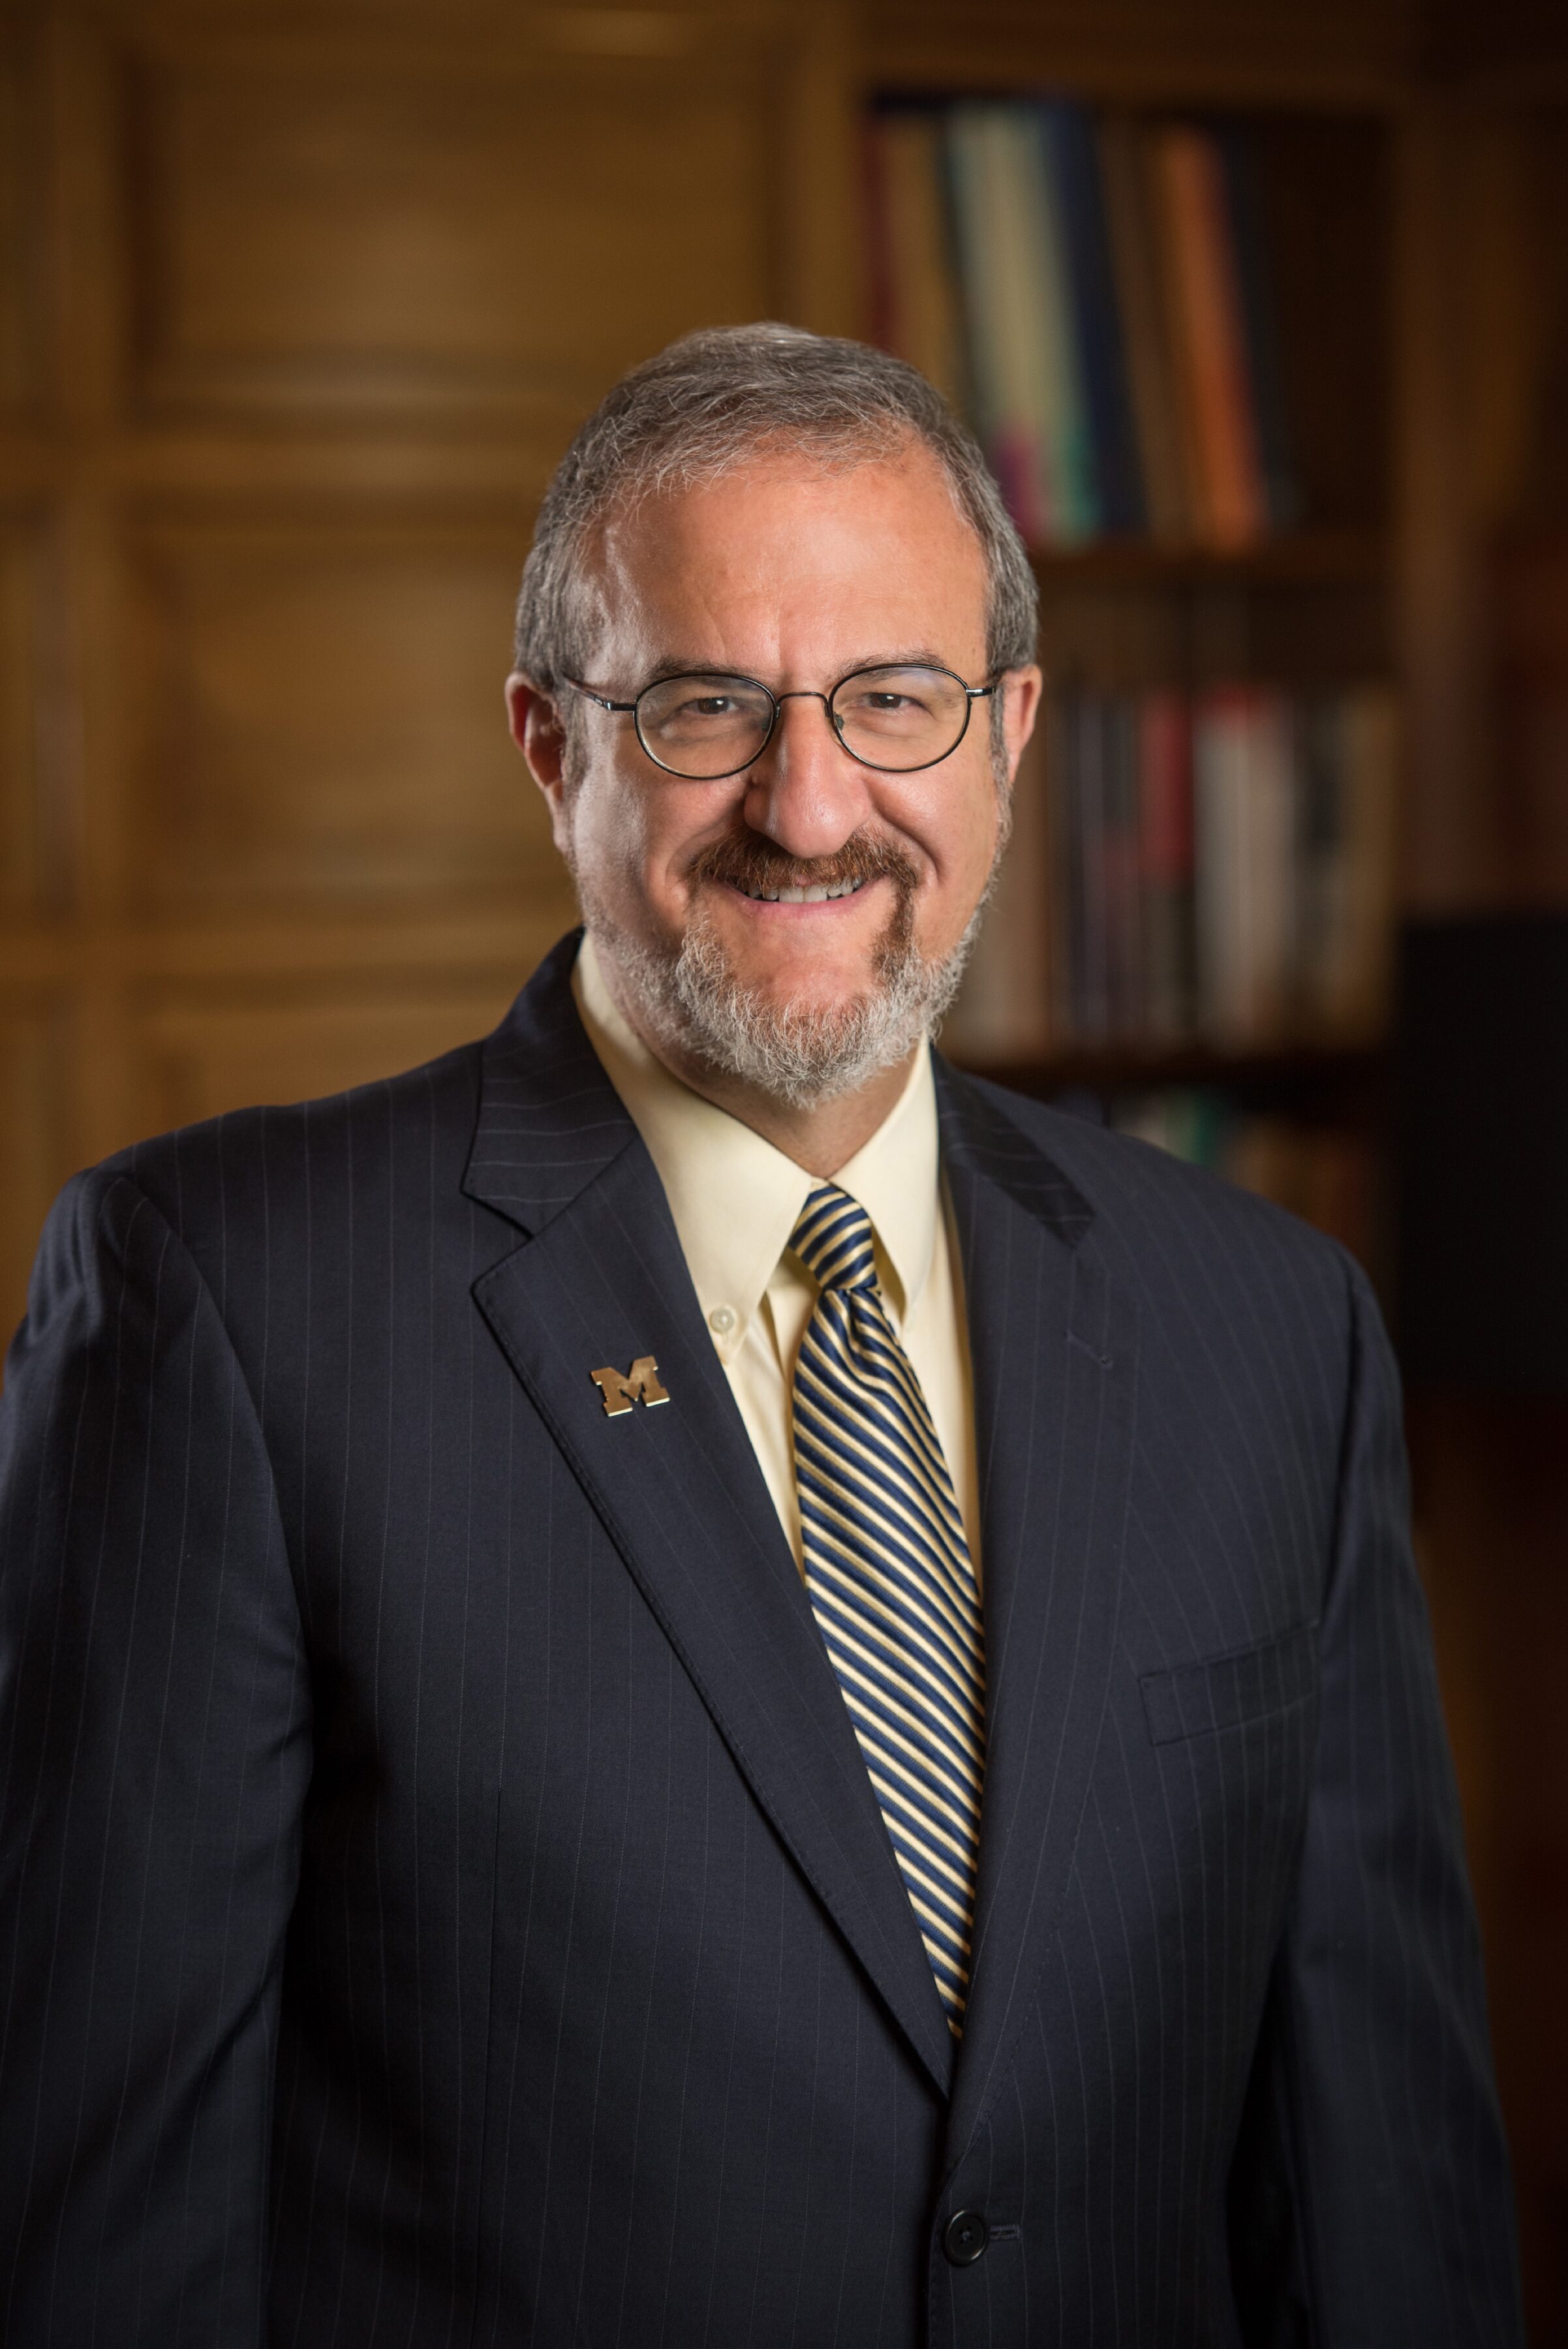 8/5/15 University Of Michigan President Mark Schlissel.